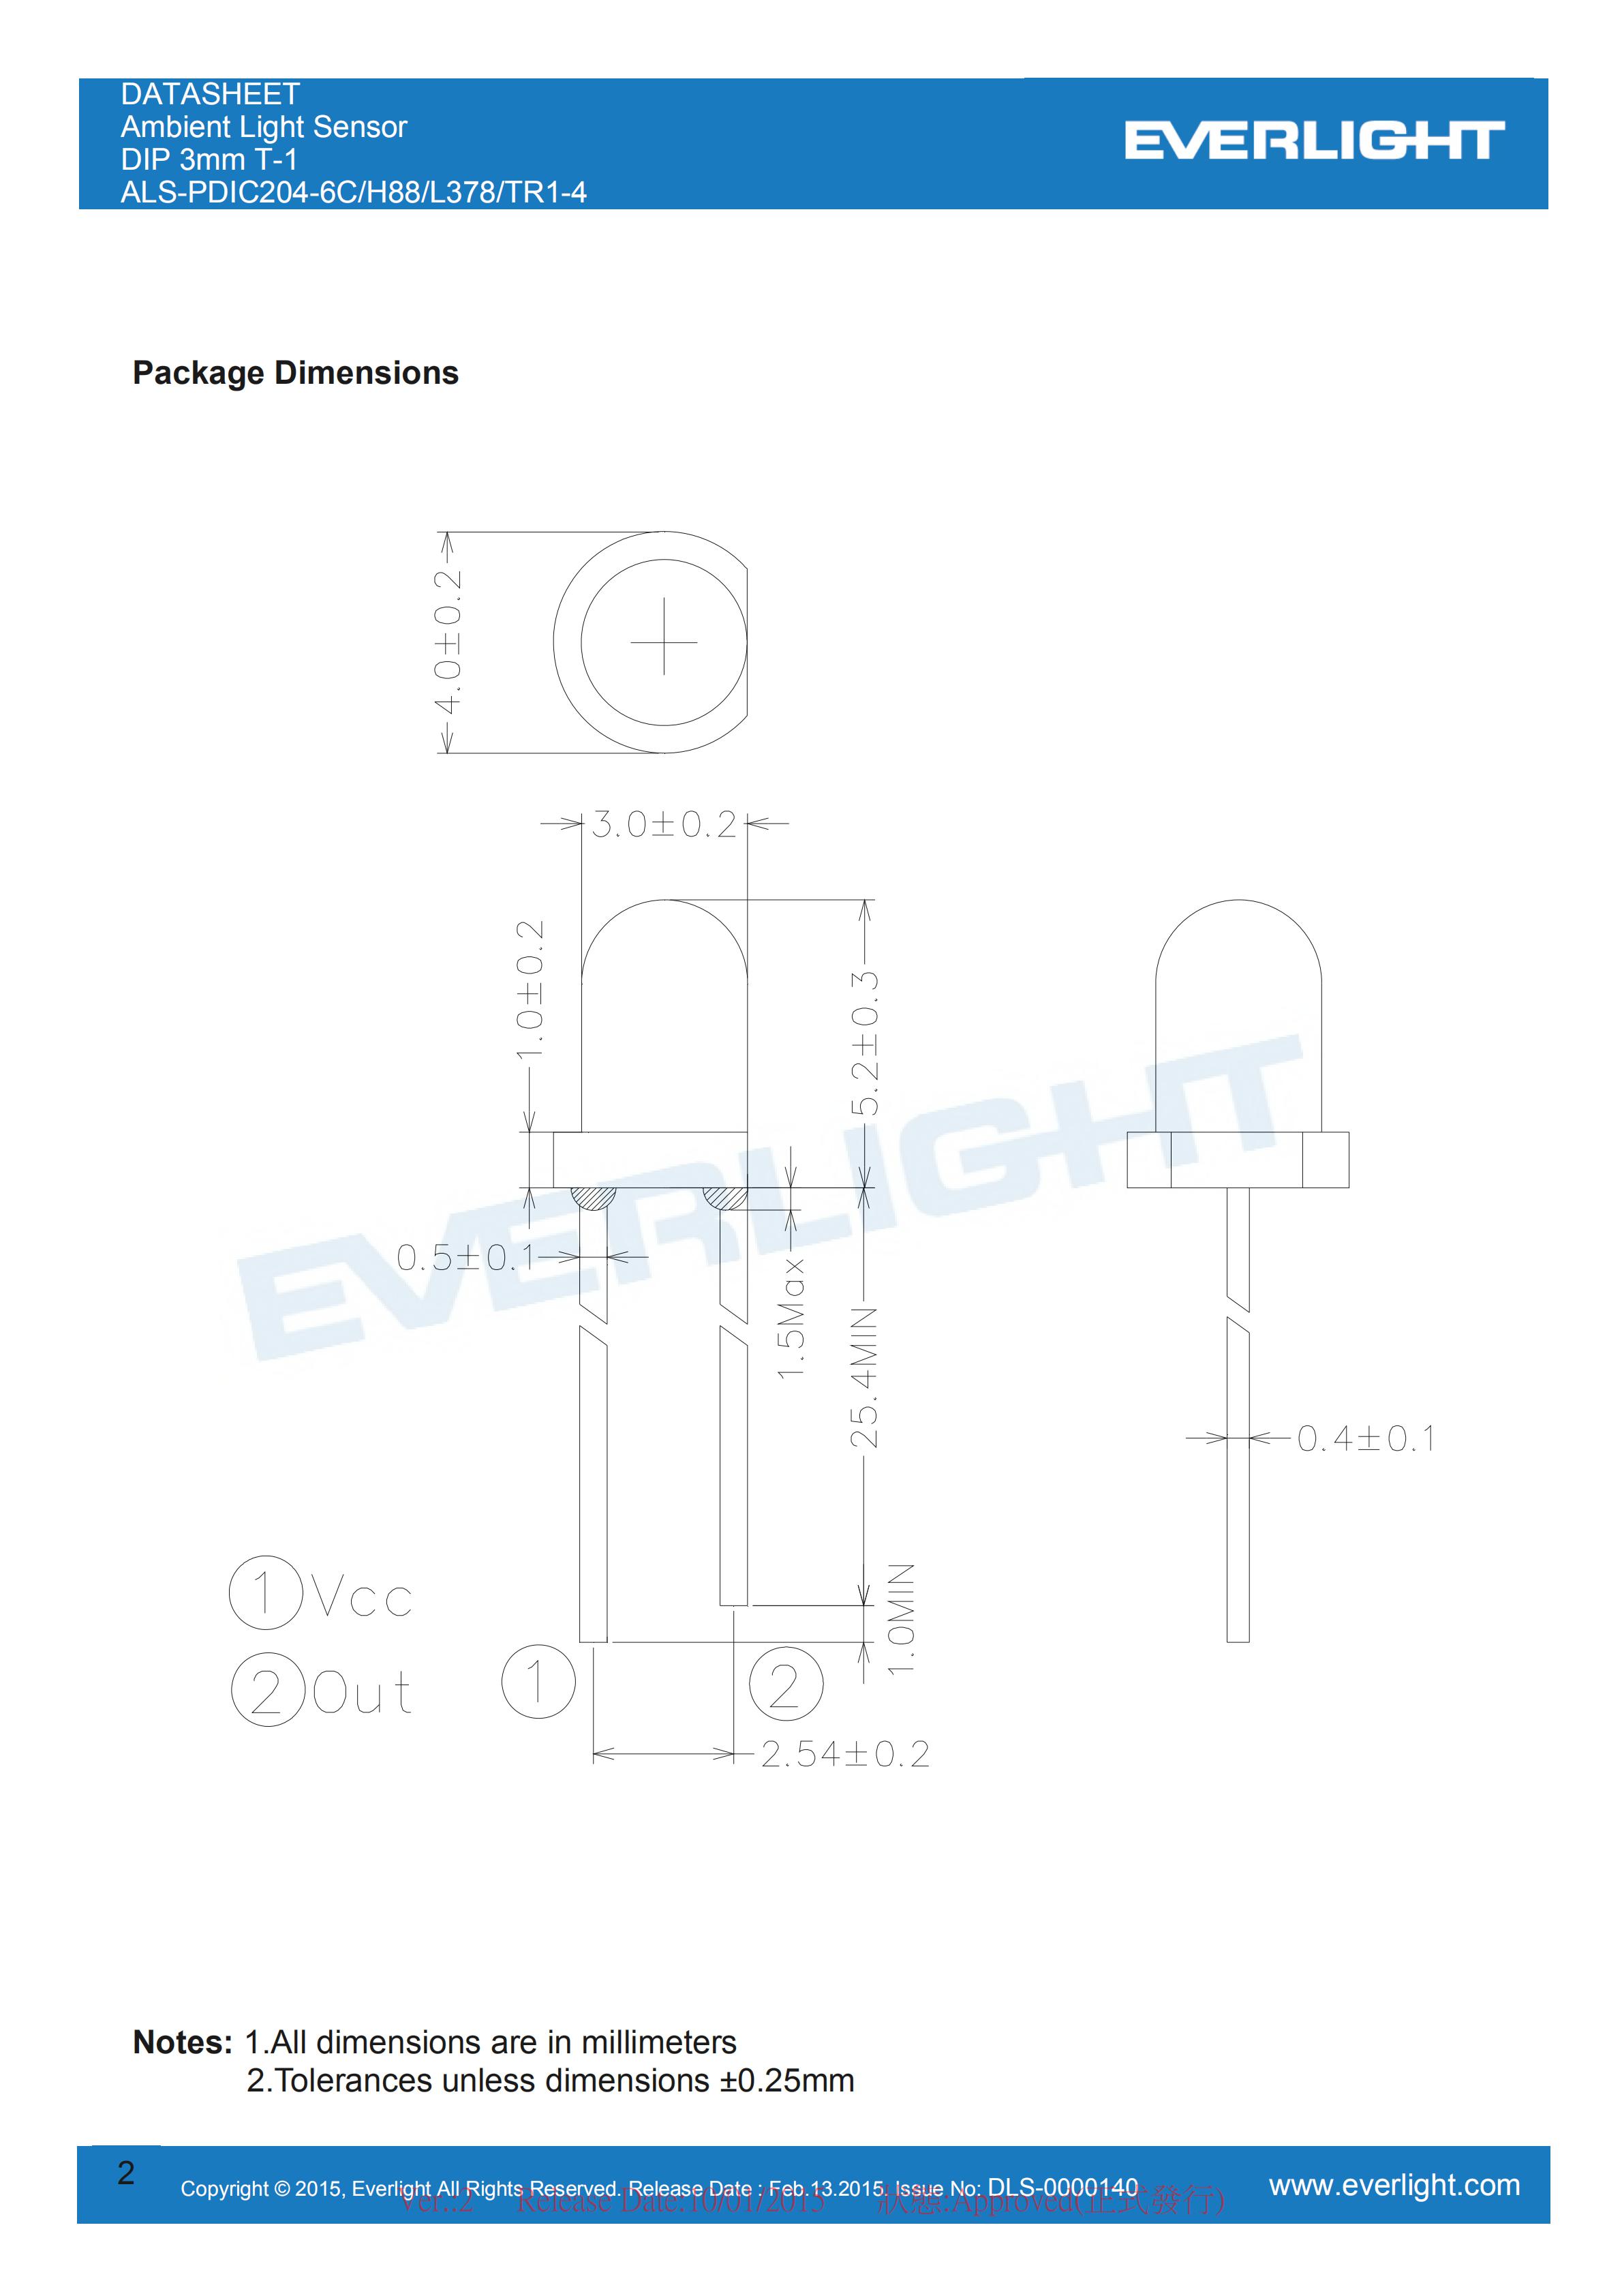 Everlight Ambient Light Sensor ALS-PDIC204-6C-H88/L378/TR1-4 Datasheet